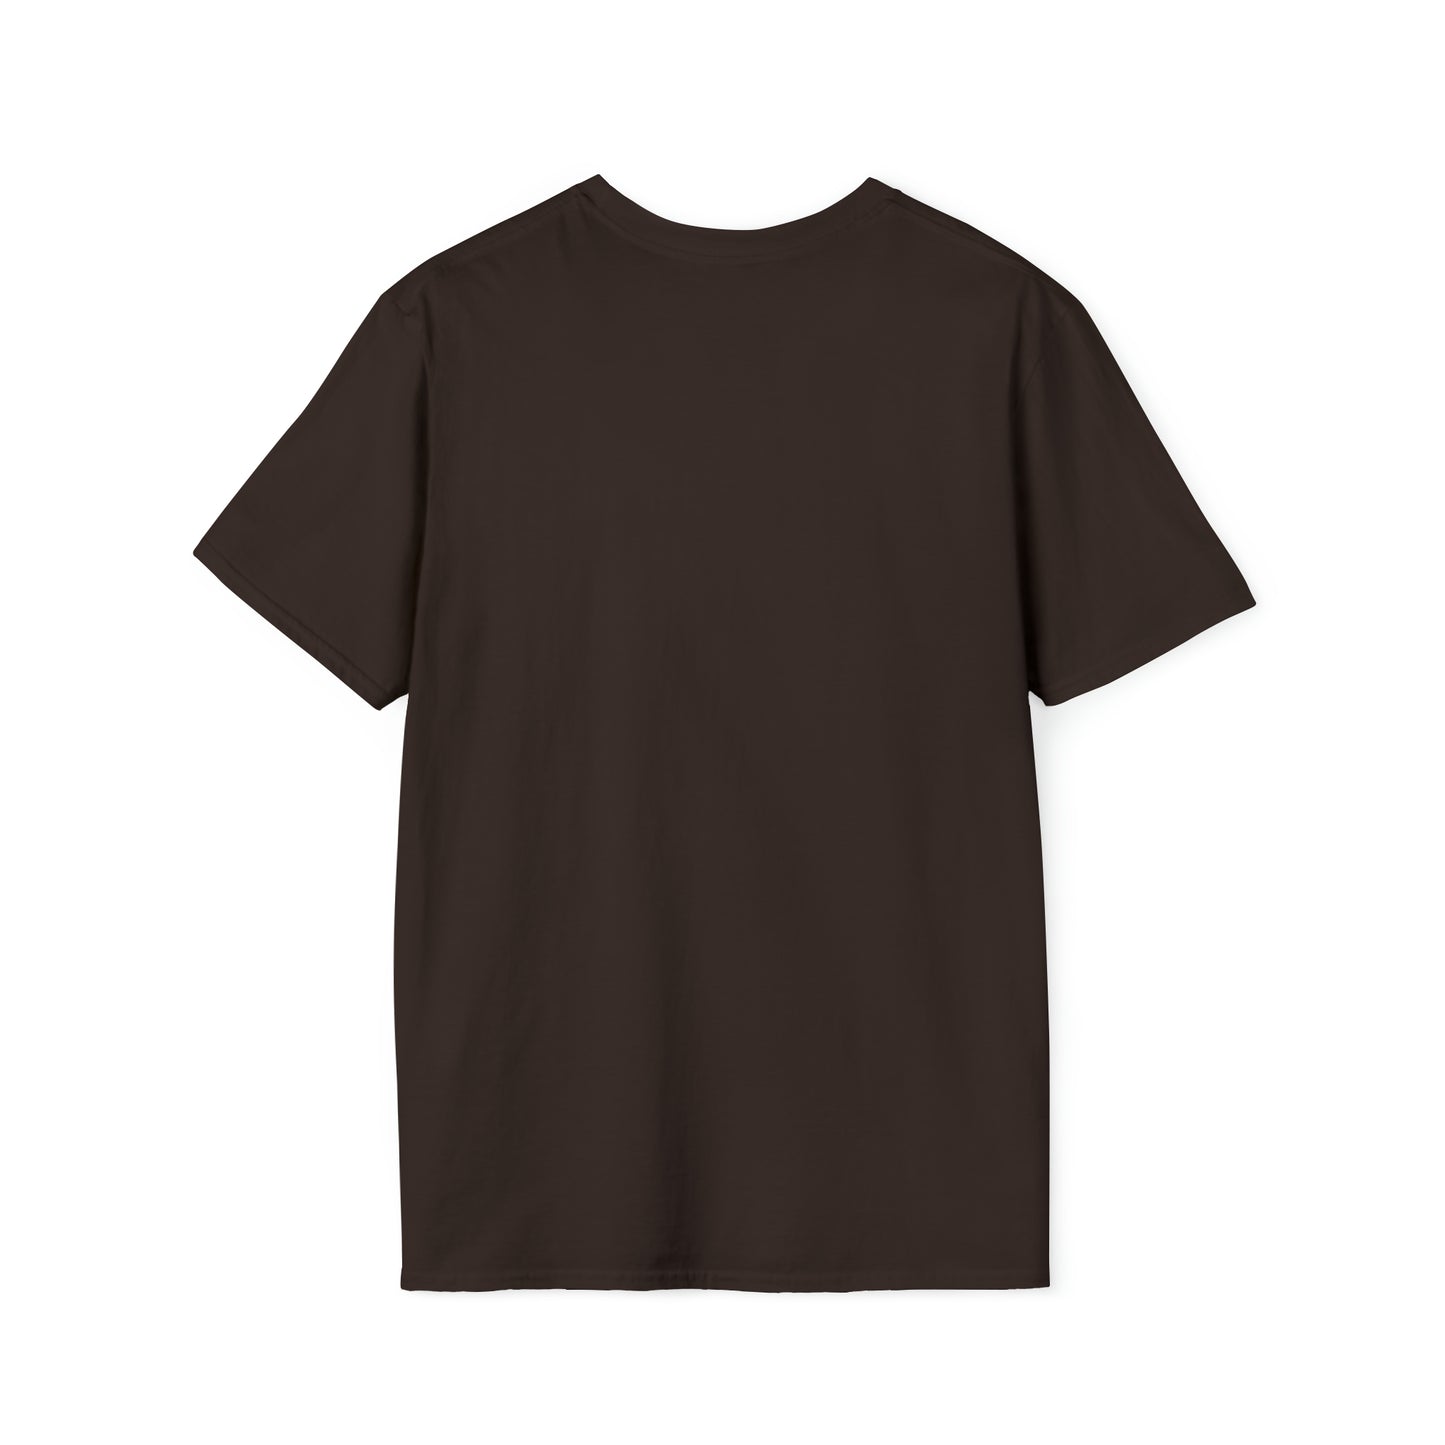 Western Bison Shirt - Bison T Shirt - Buffalo Shirt - Wyoming Shirt - Bison, 100% Cotton - Casual Comfort - Unique Wildlife Design